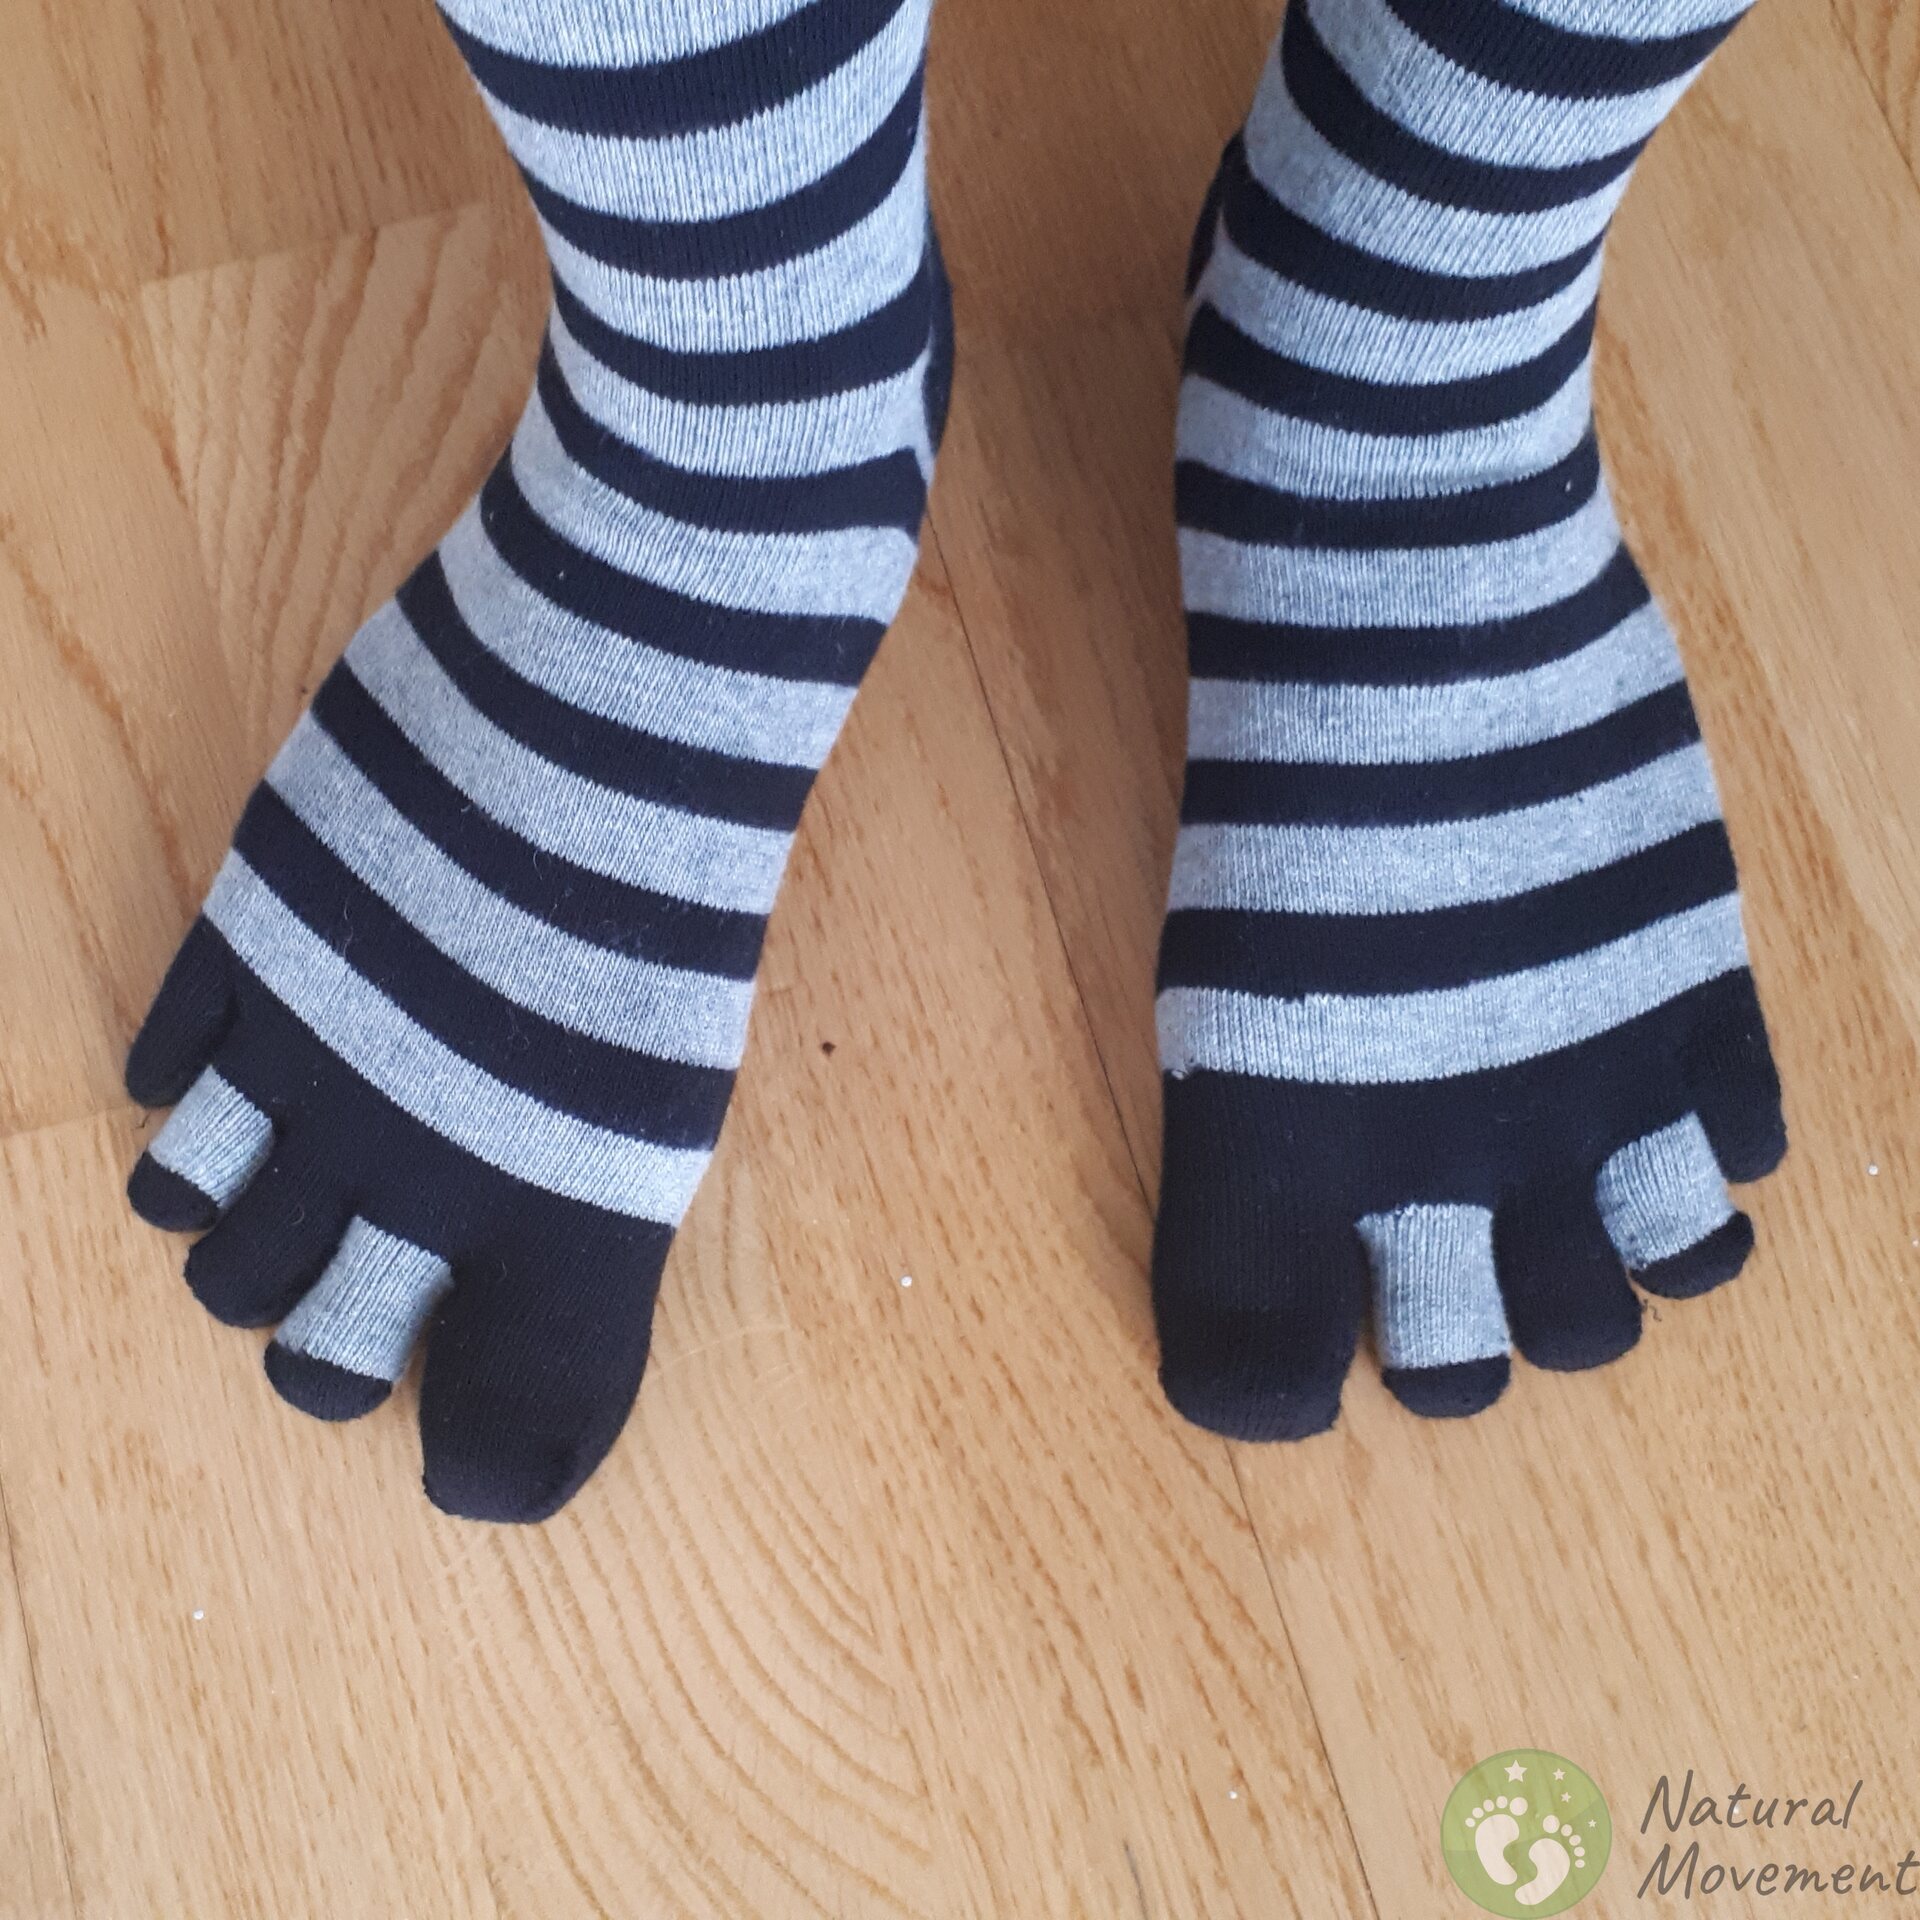 TOETOE Women Essential Stretchy Knee-high Soft Cotton Seamless Stripy Toe  Socks, Hygienic, Breathable, Uk 4-11 Eu 35-46 Us 4.5-11.5 